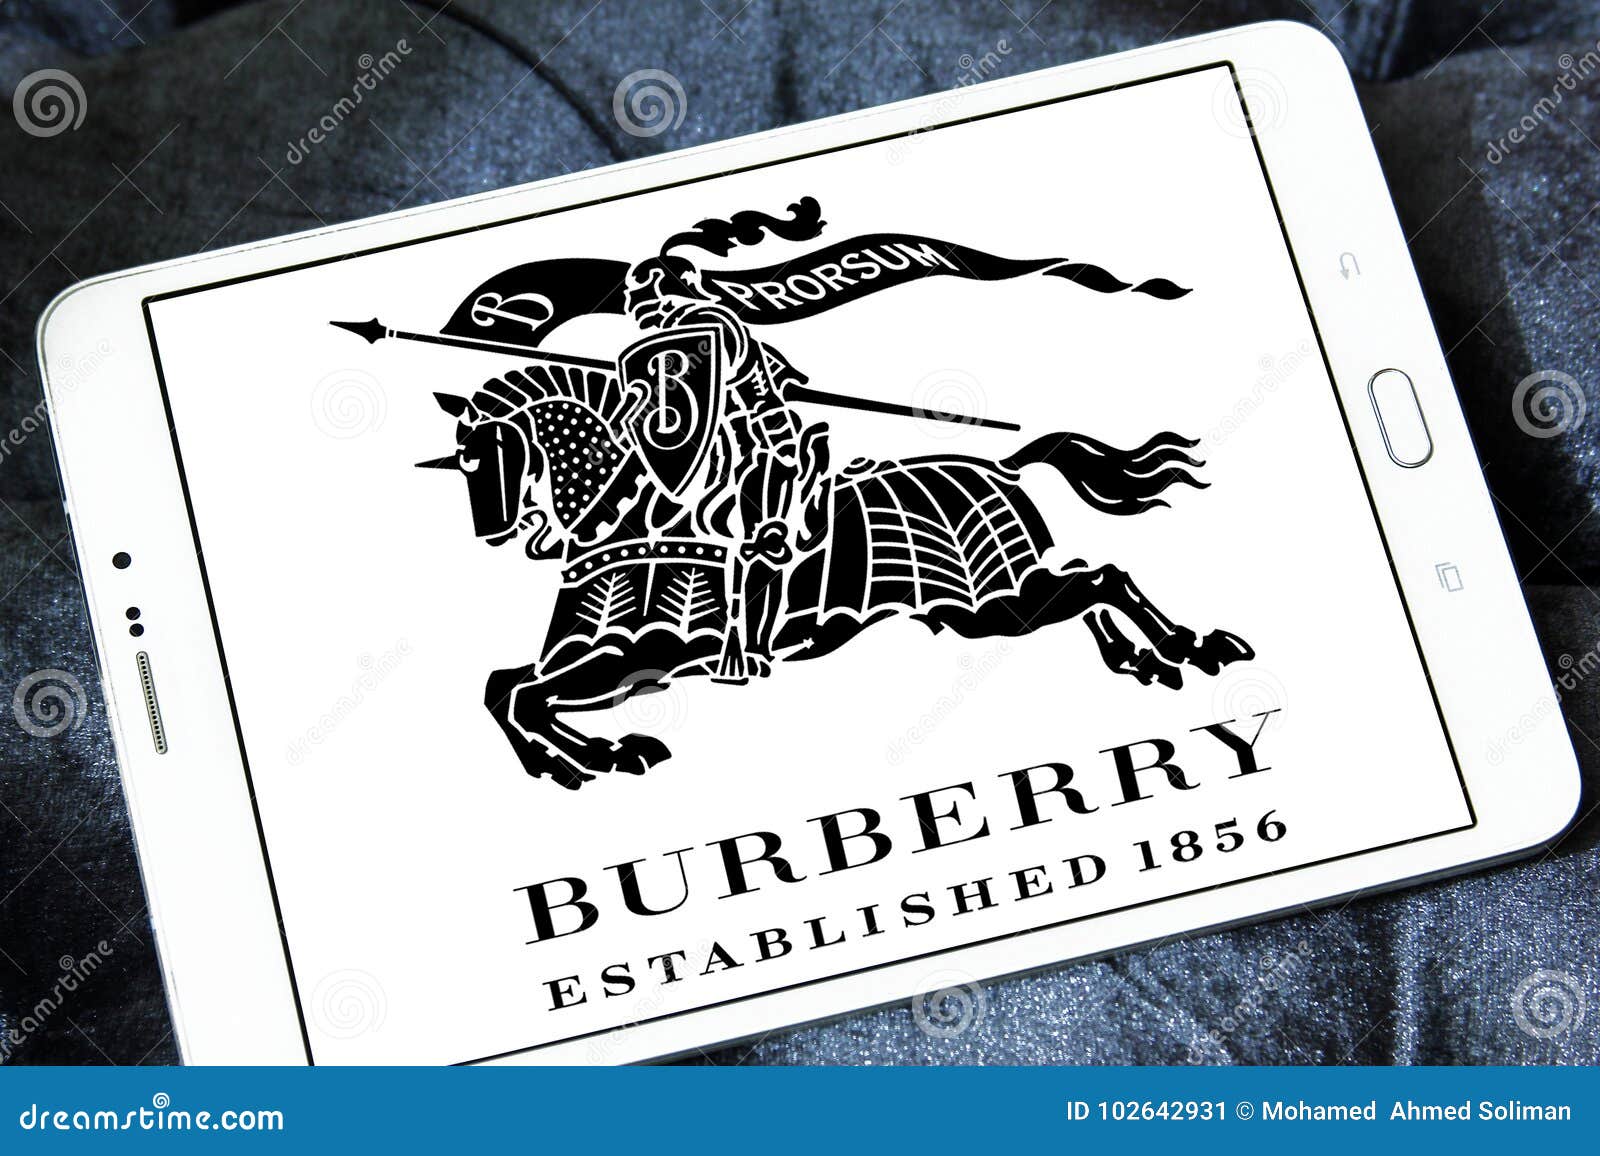 burberry group plc stock